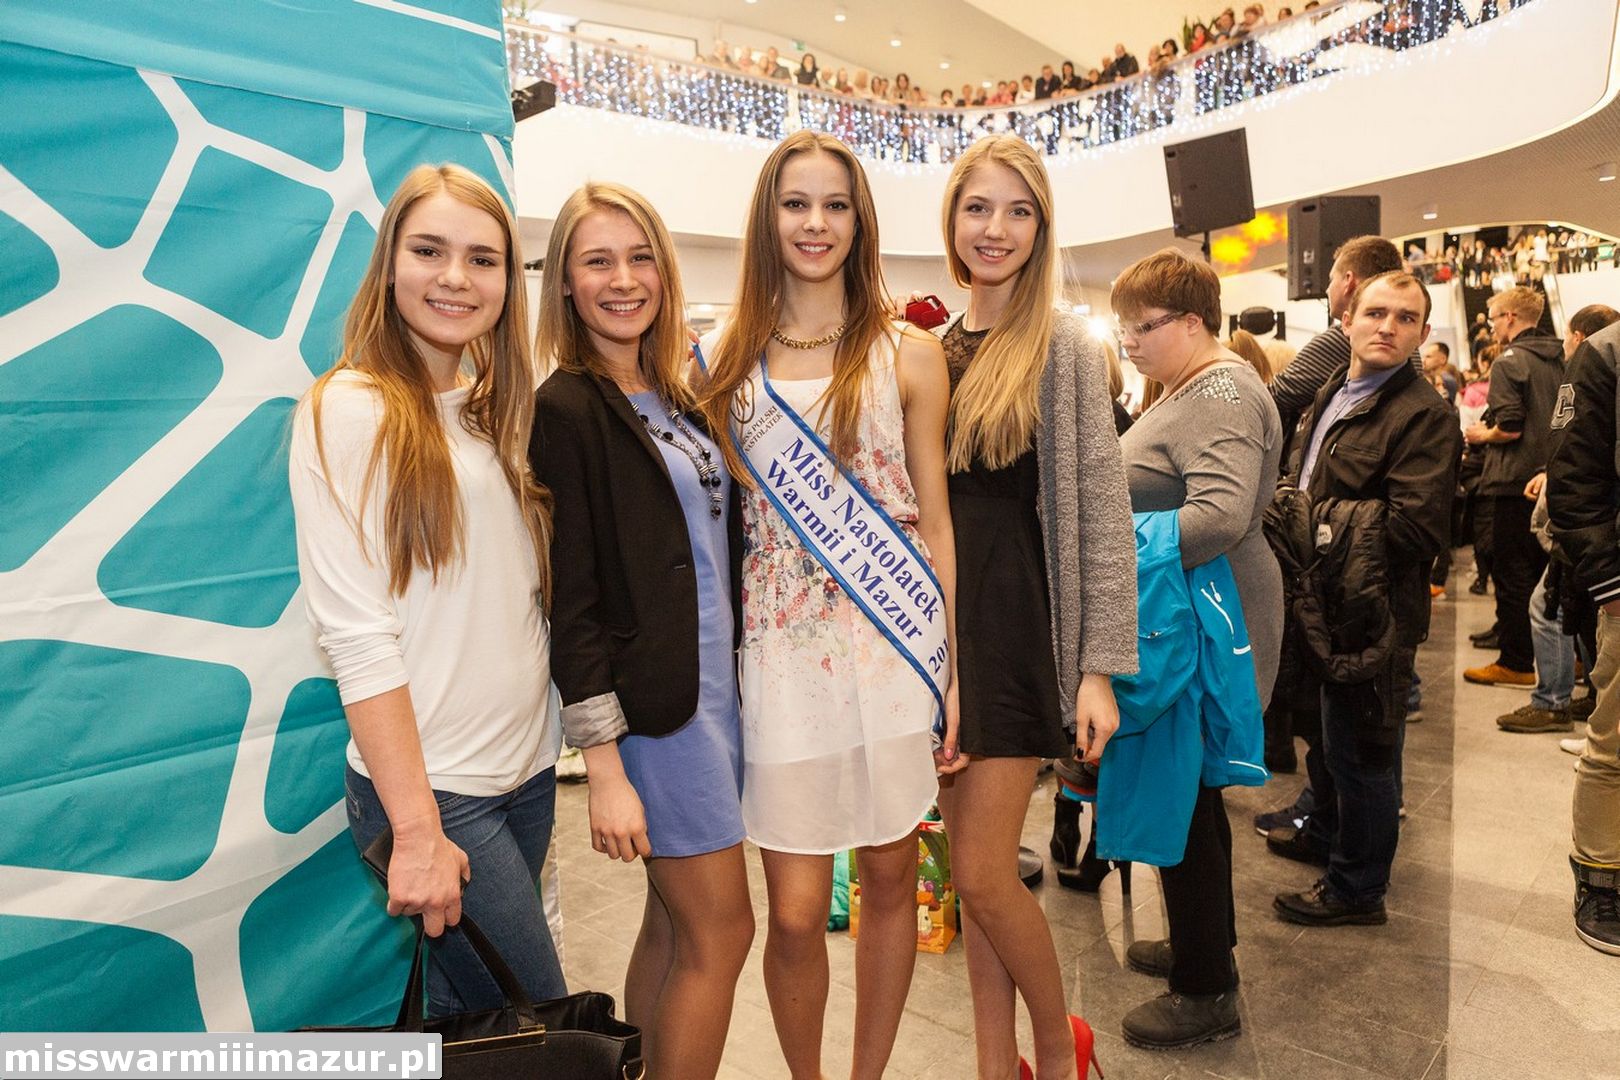 , Miss Warmii i Mazur 2015. Casting w Galerii Warmińskiej Olsztyn, Miss Warmii i Mazur, Miss Warmii i Mazur